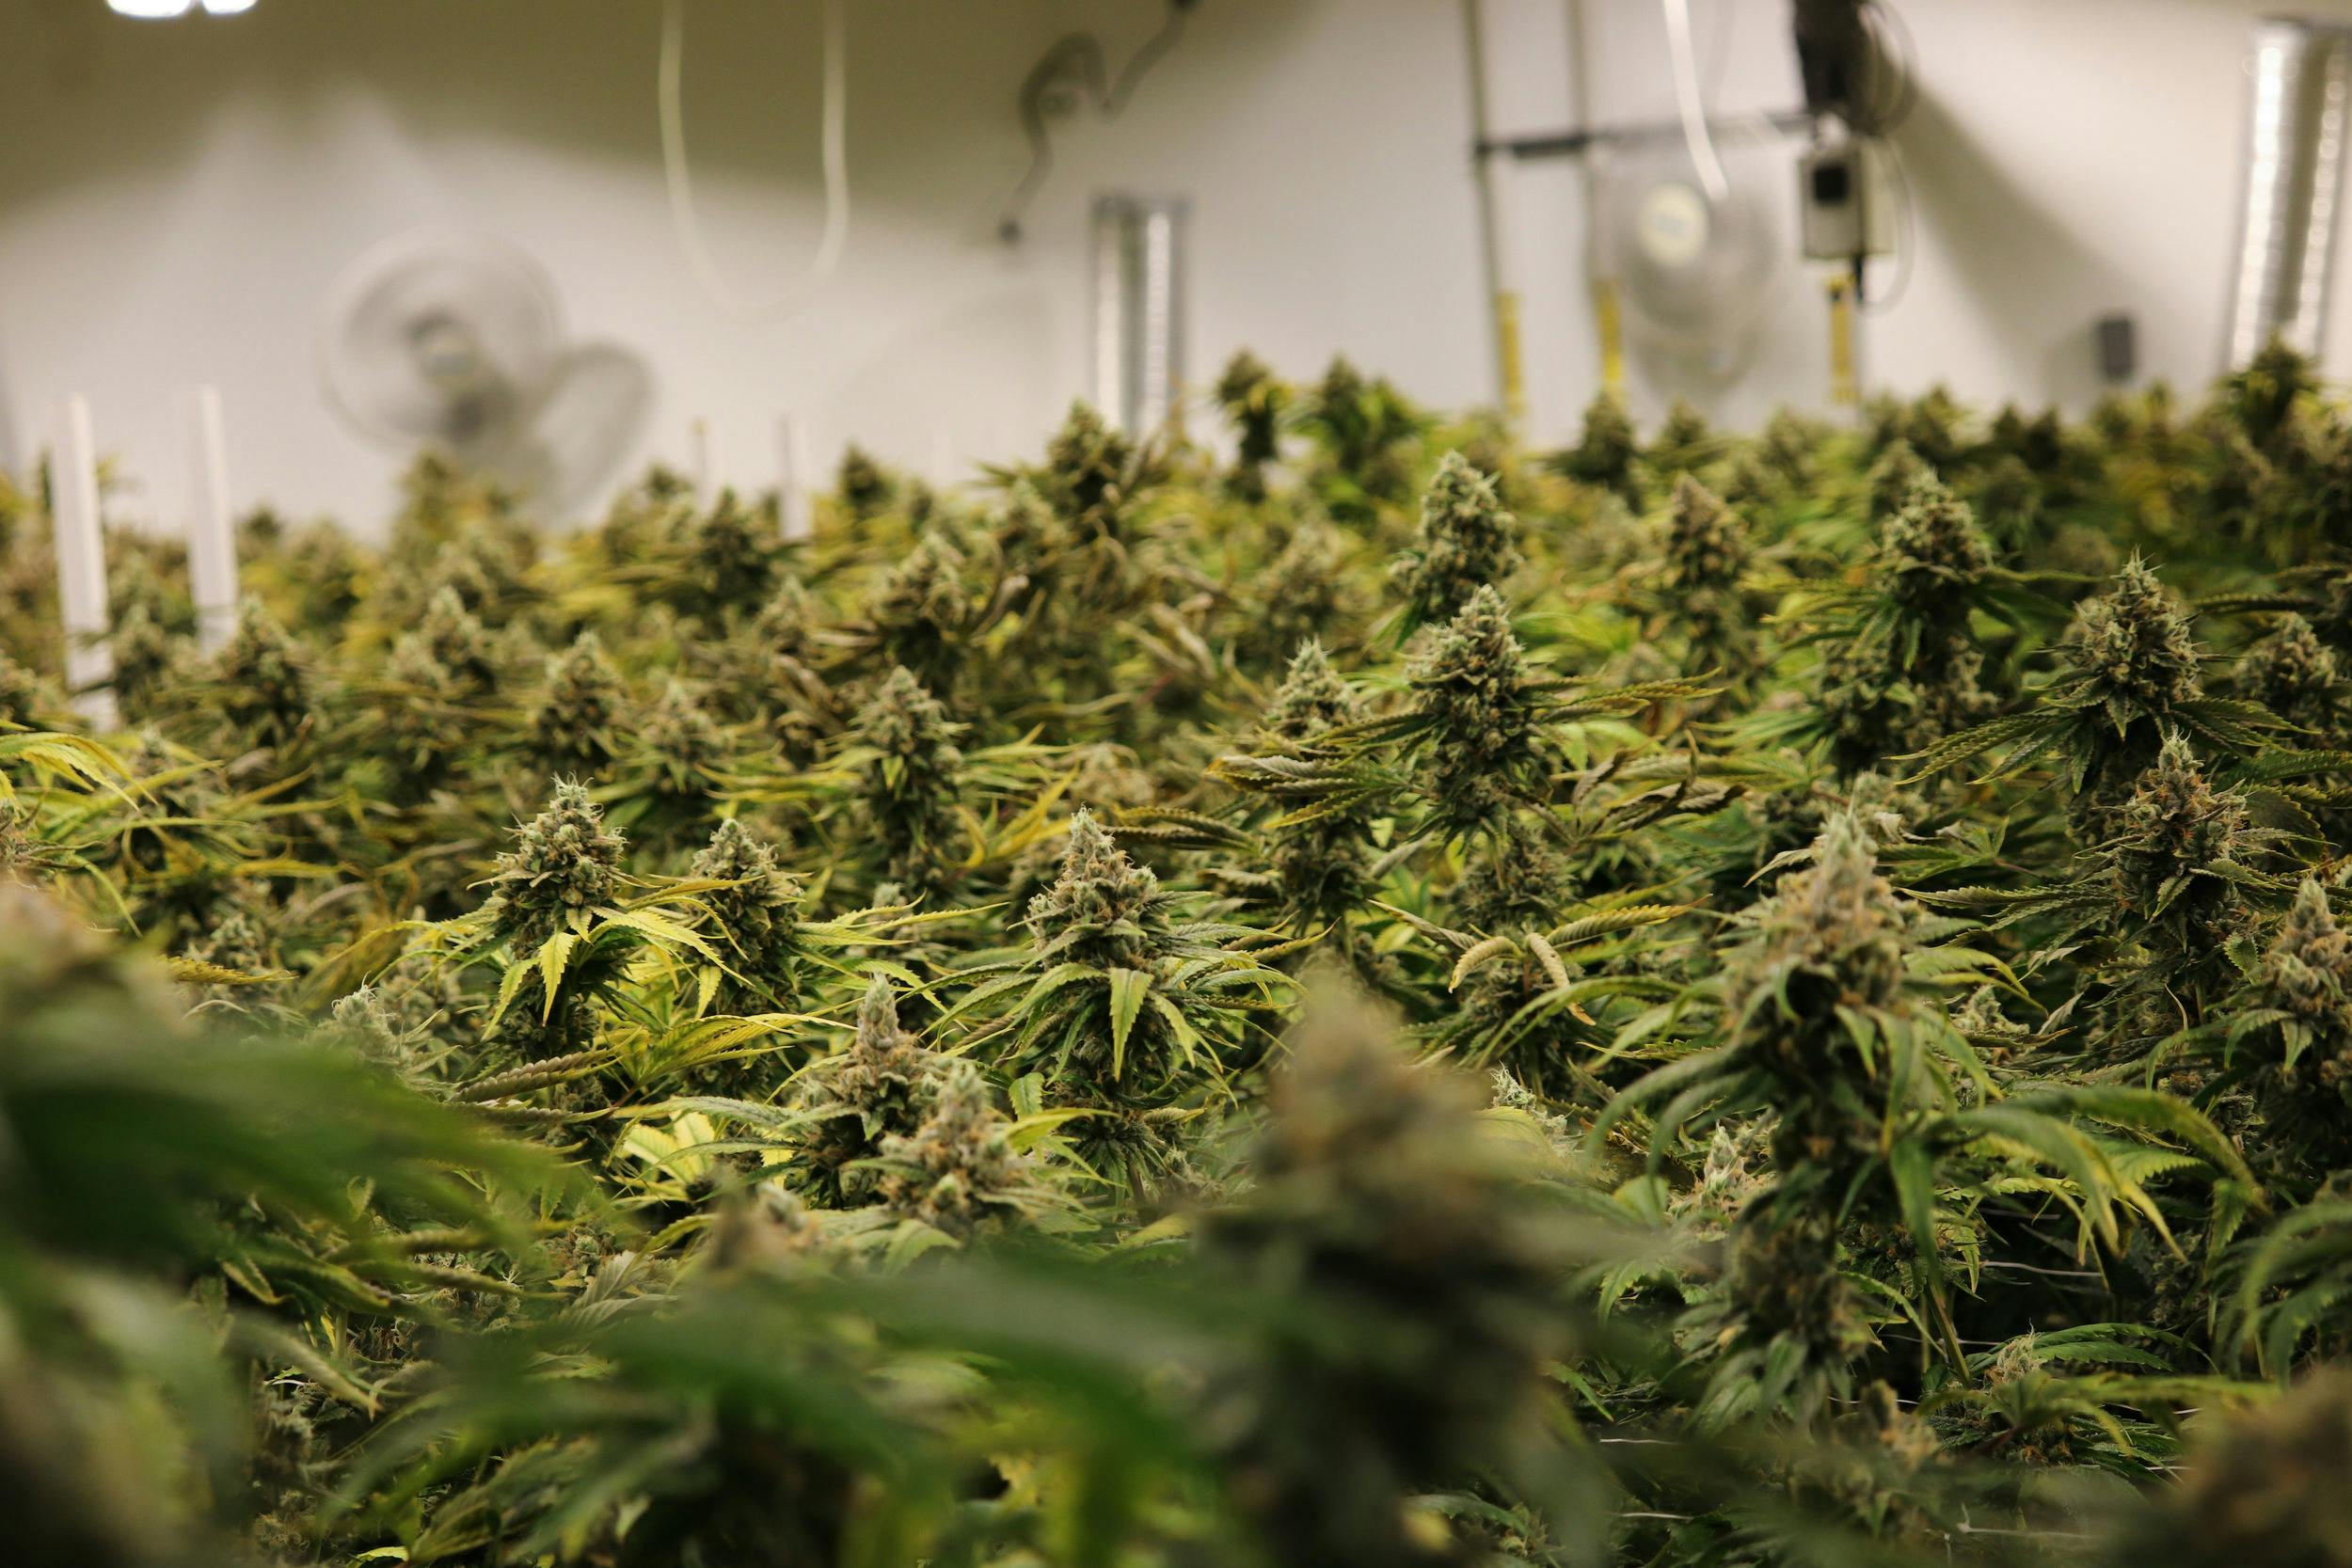 a field of cannabis plants inside an indoor marijuana grow facility